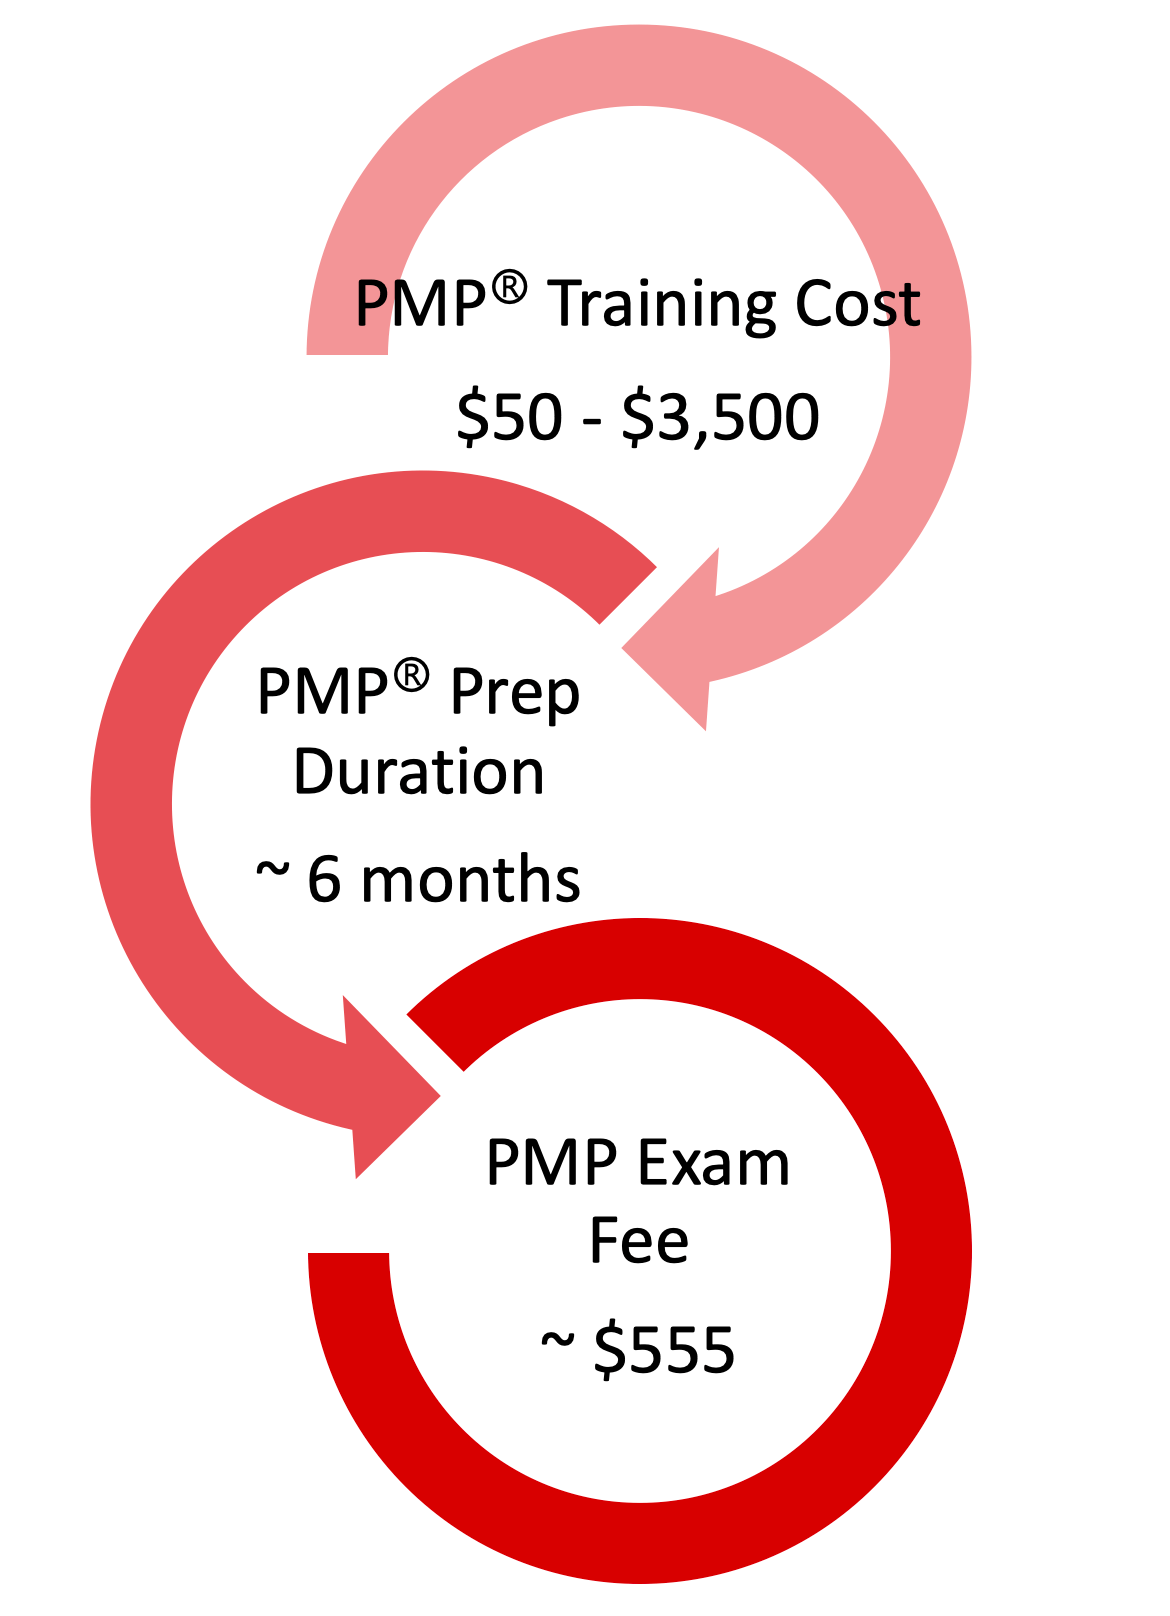 pmp certification online best prices